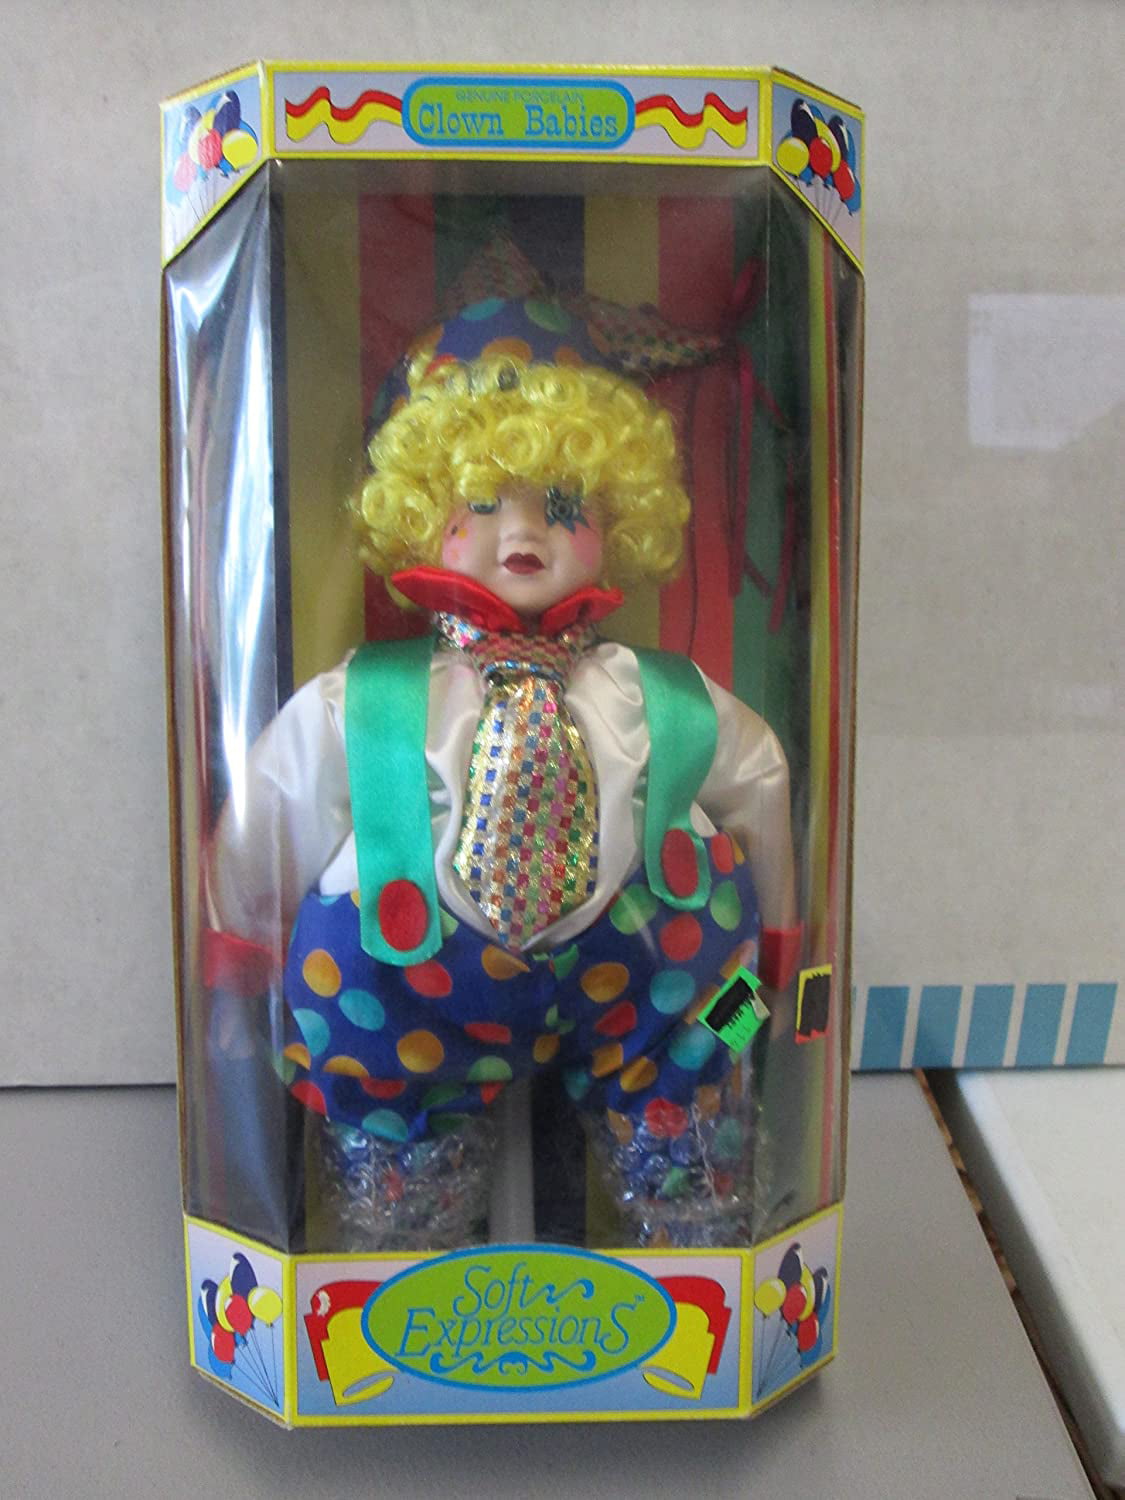 Dan Dee Dandee Genuine Porcelain Clown Babies Soft Expressions